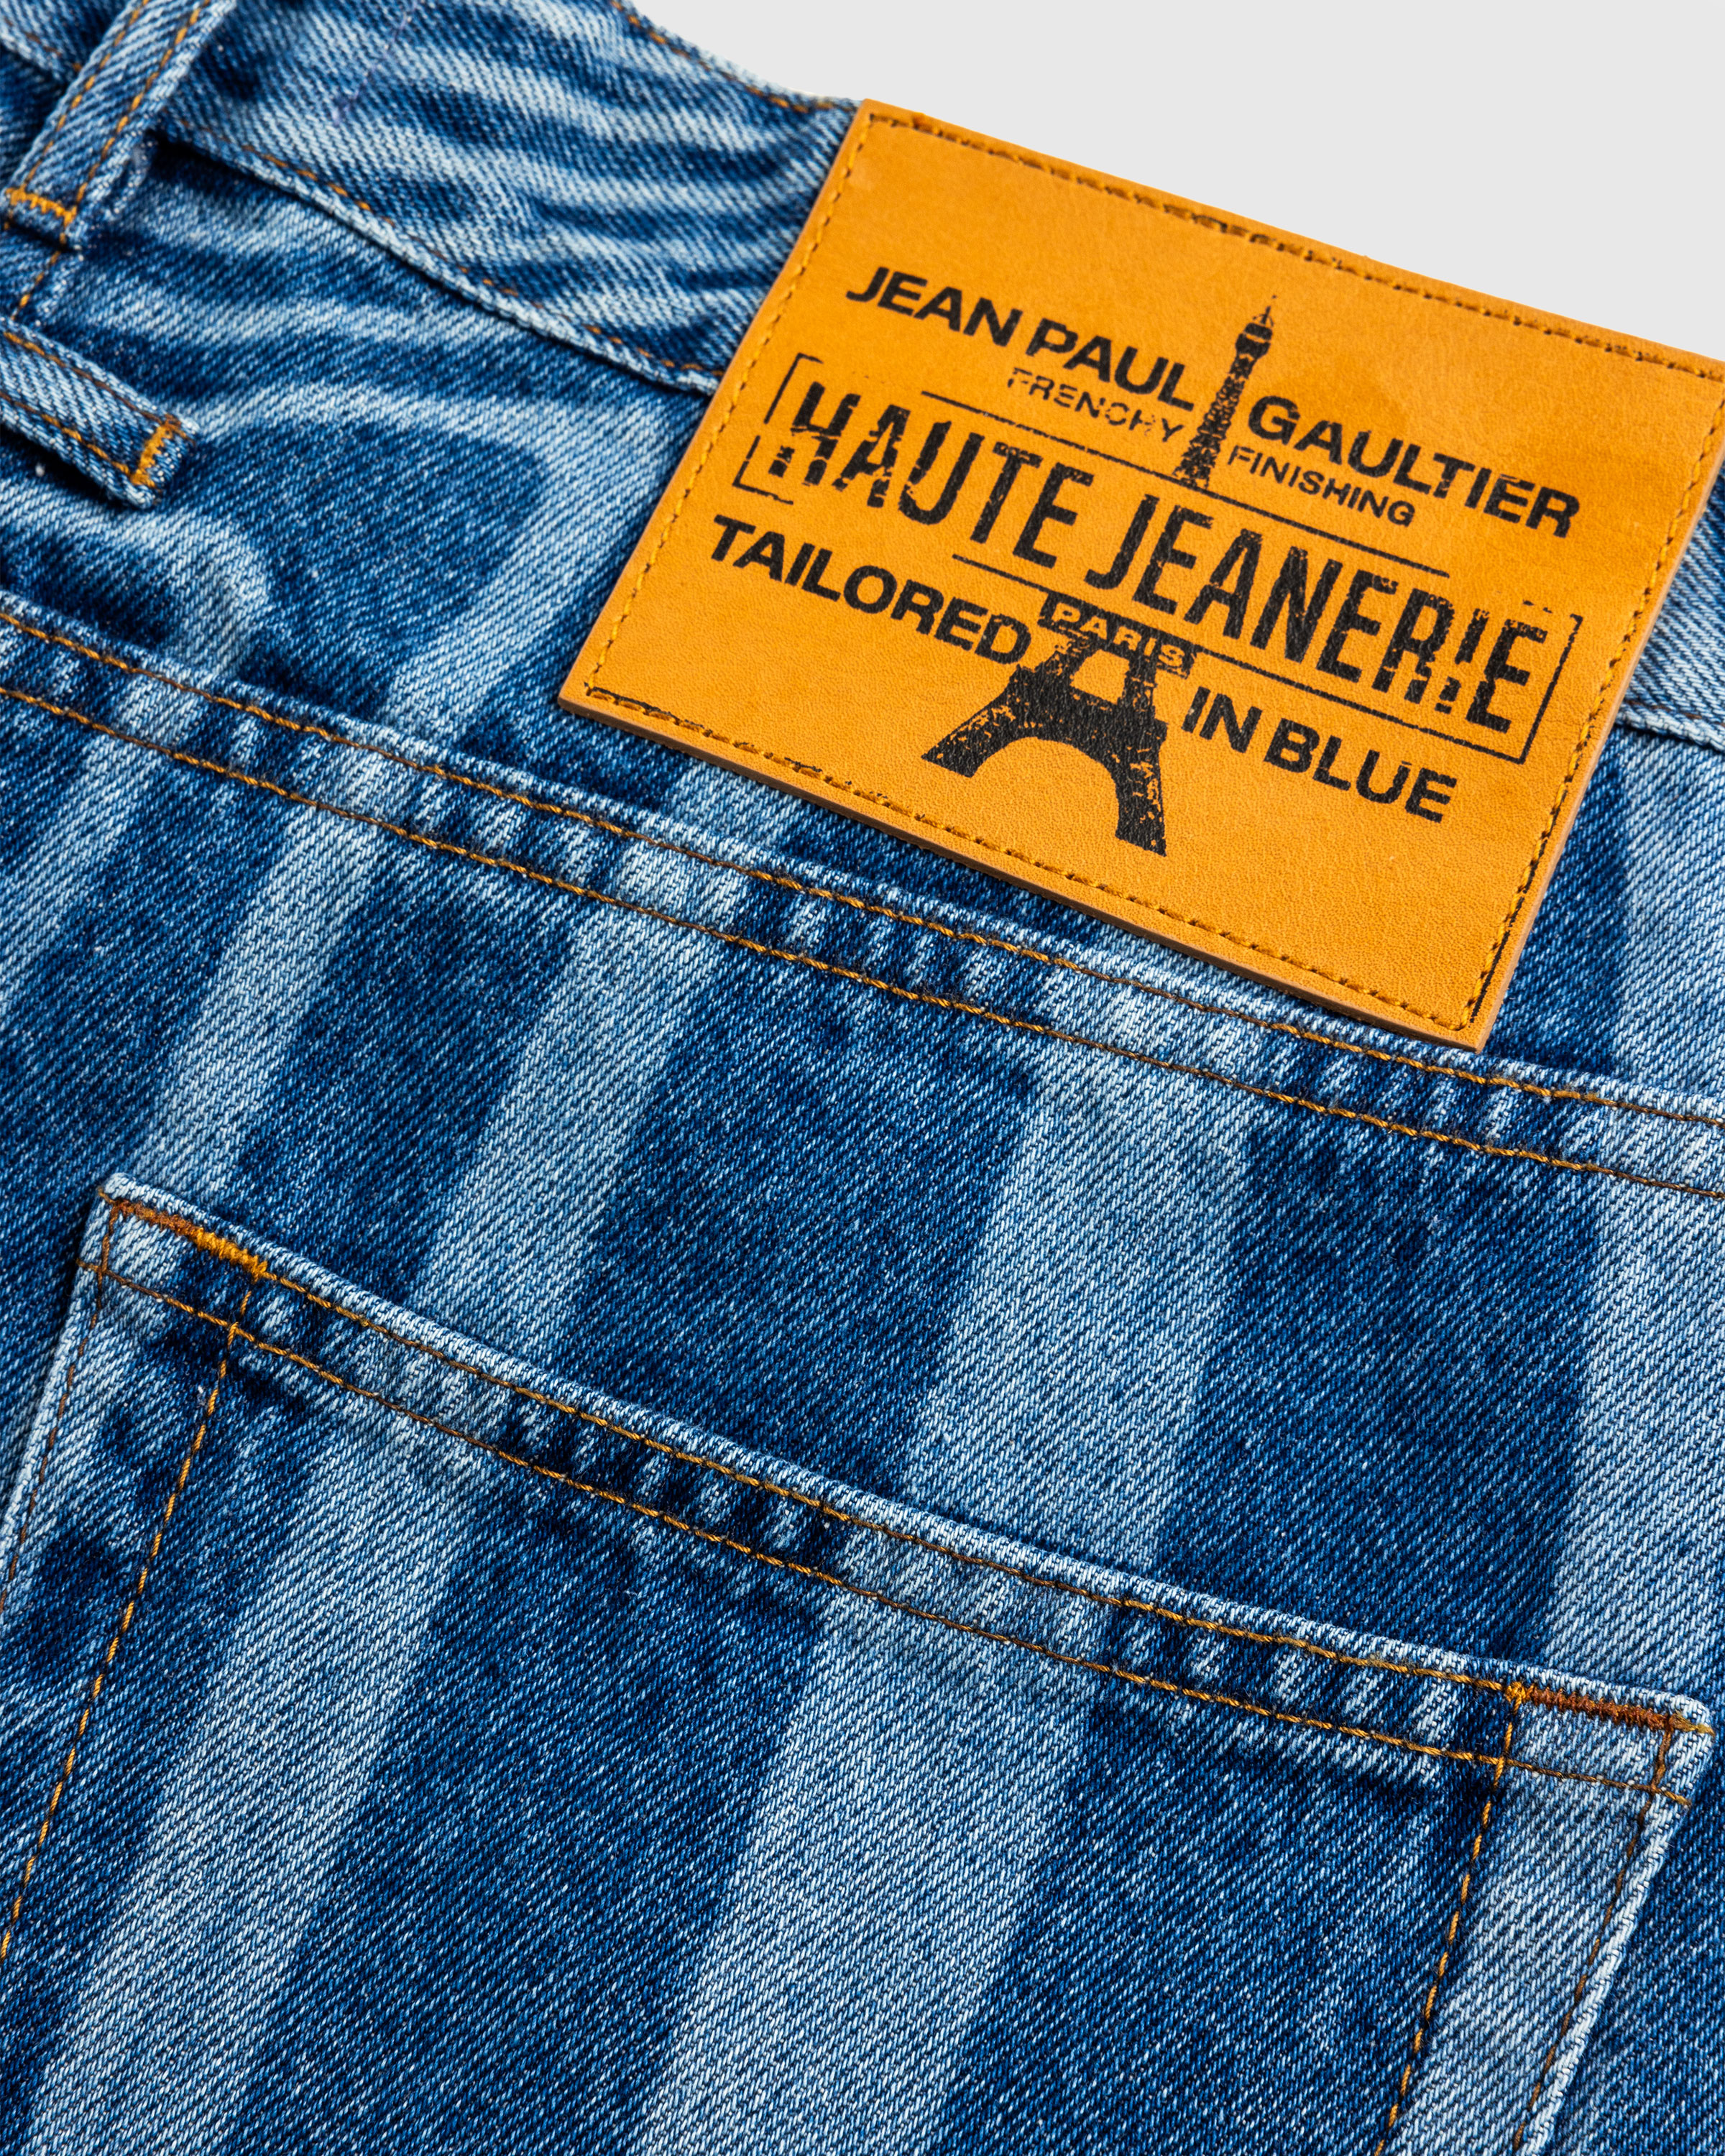 Jean Paul Gaultier – Laser Print Denim Pant Vintage Blue - Denim - Blue - Image 6